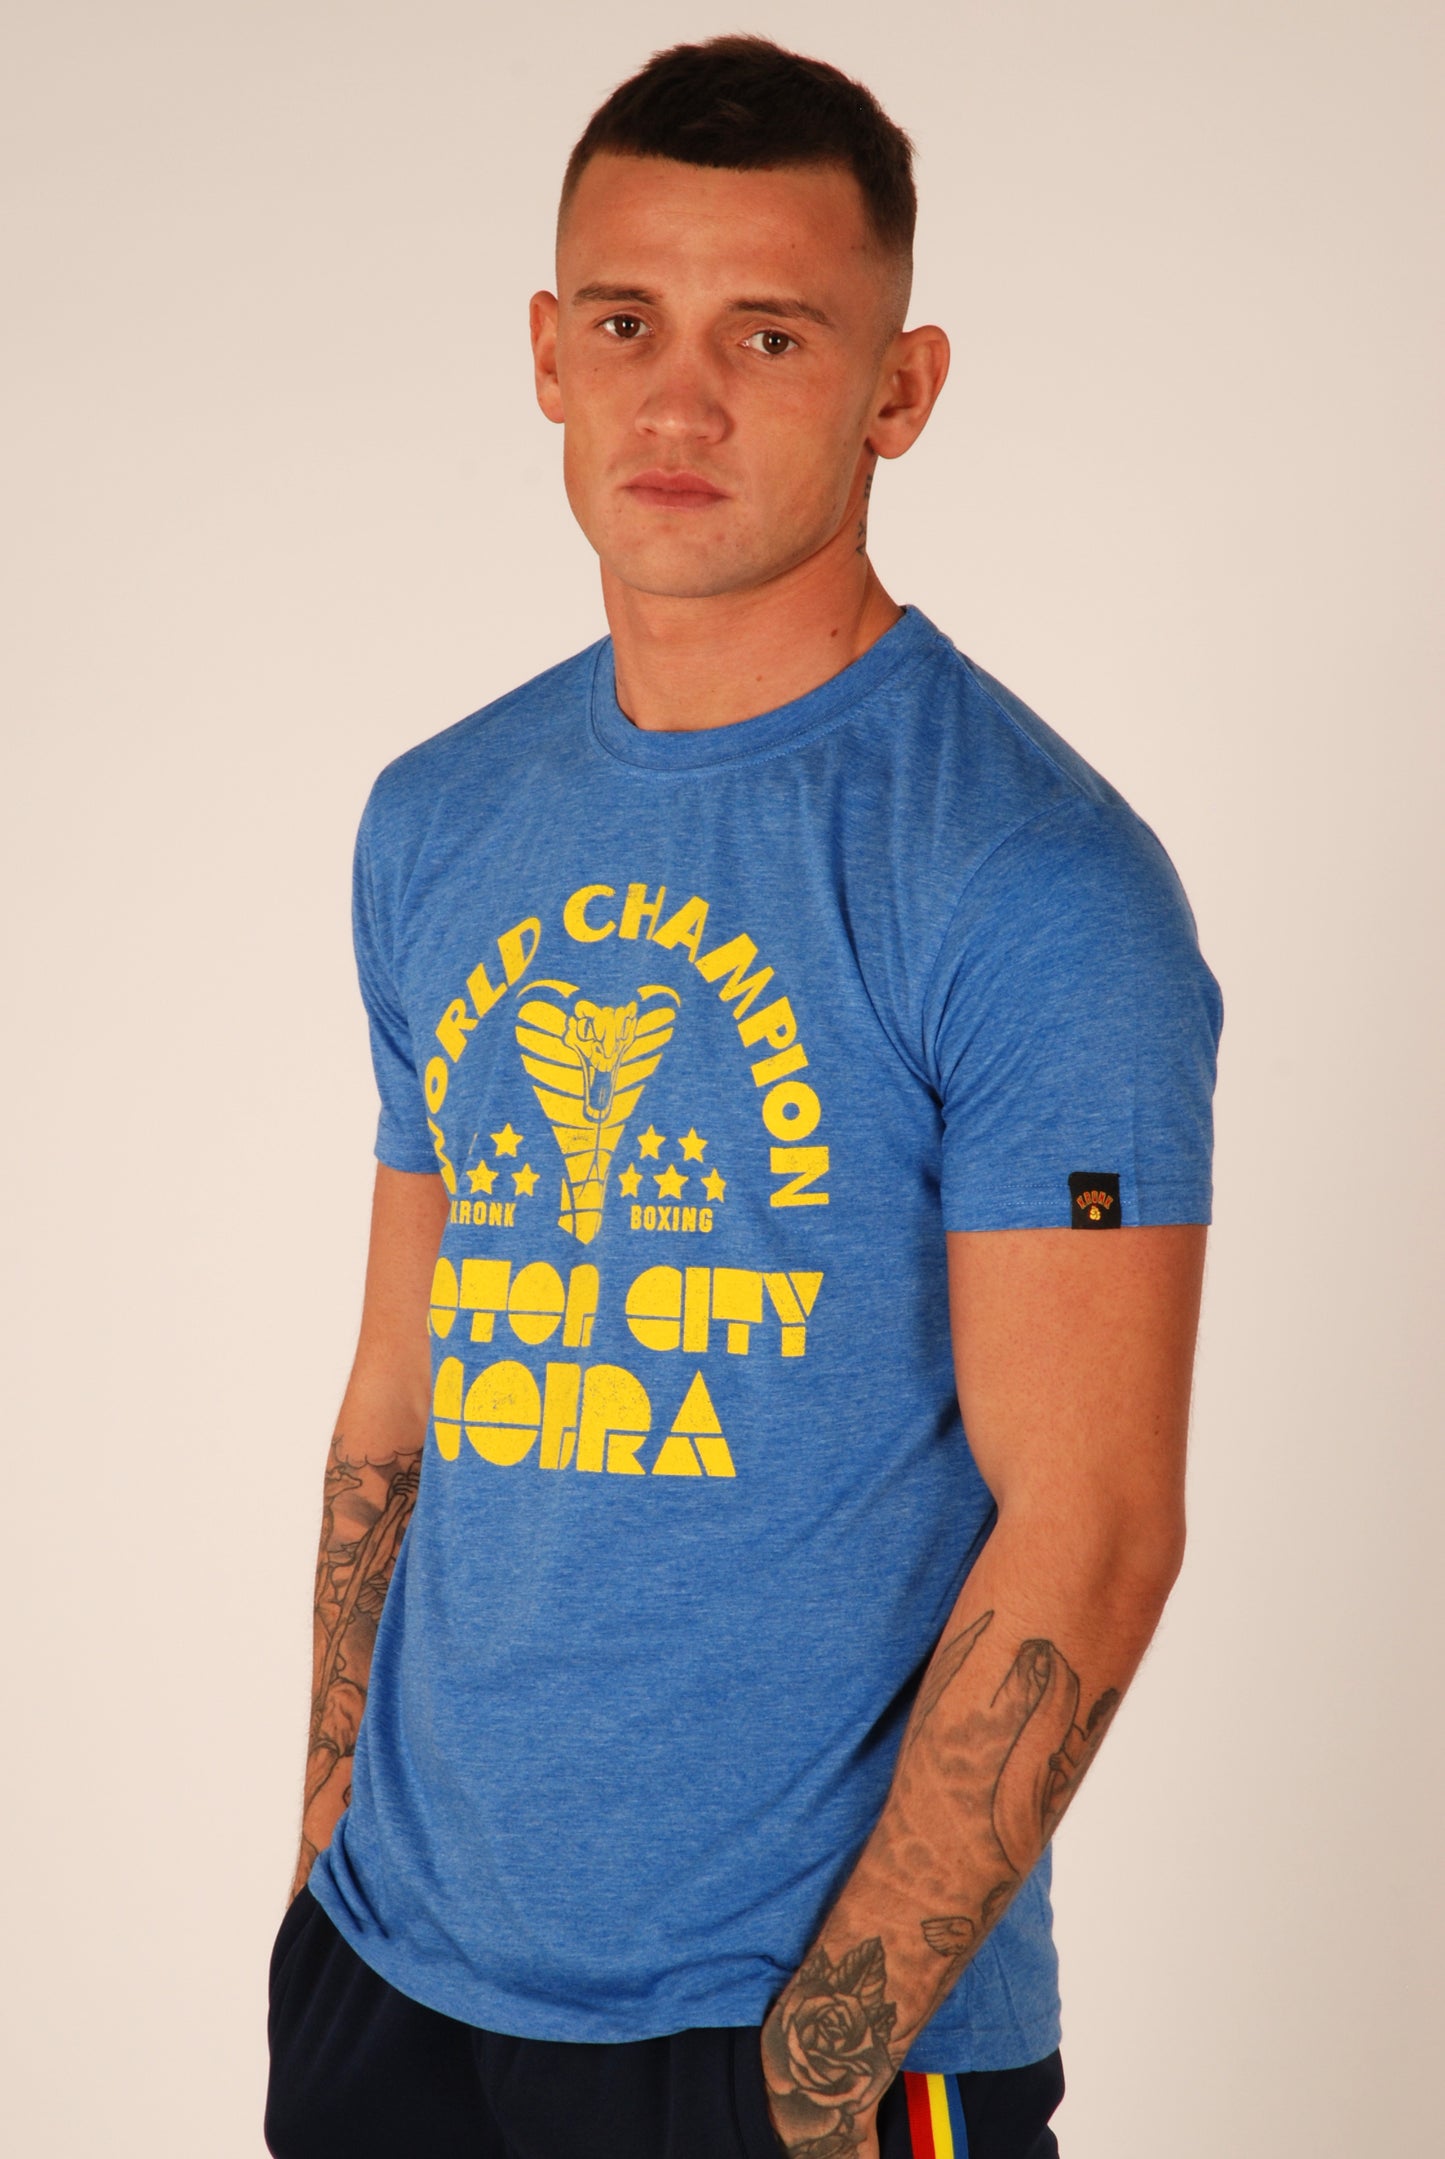 KRONK Thomas Hearns Motor City Cobra Slimfit T Shirt Royal Blue Melange